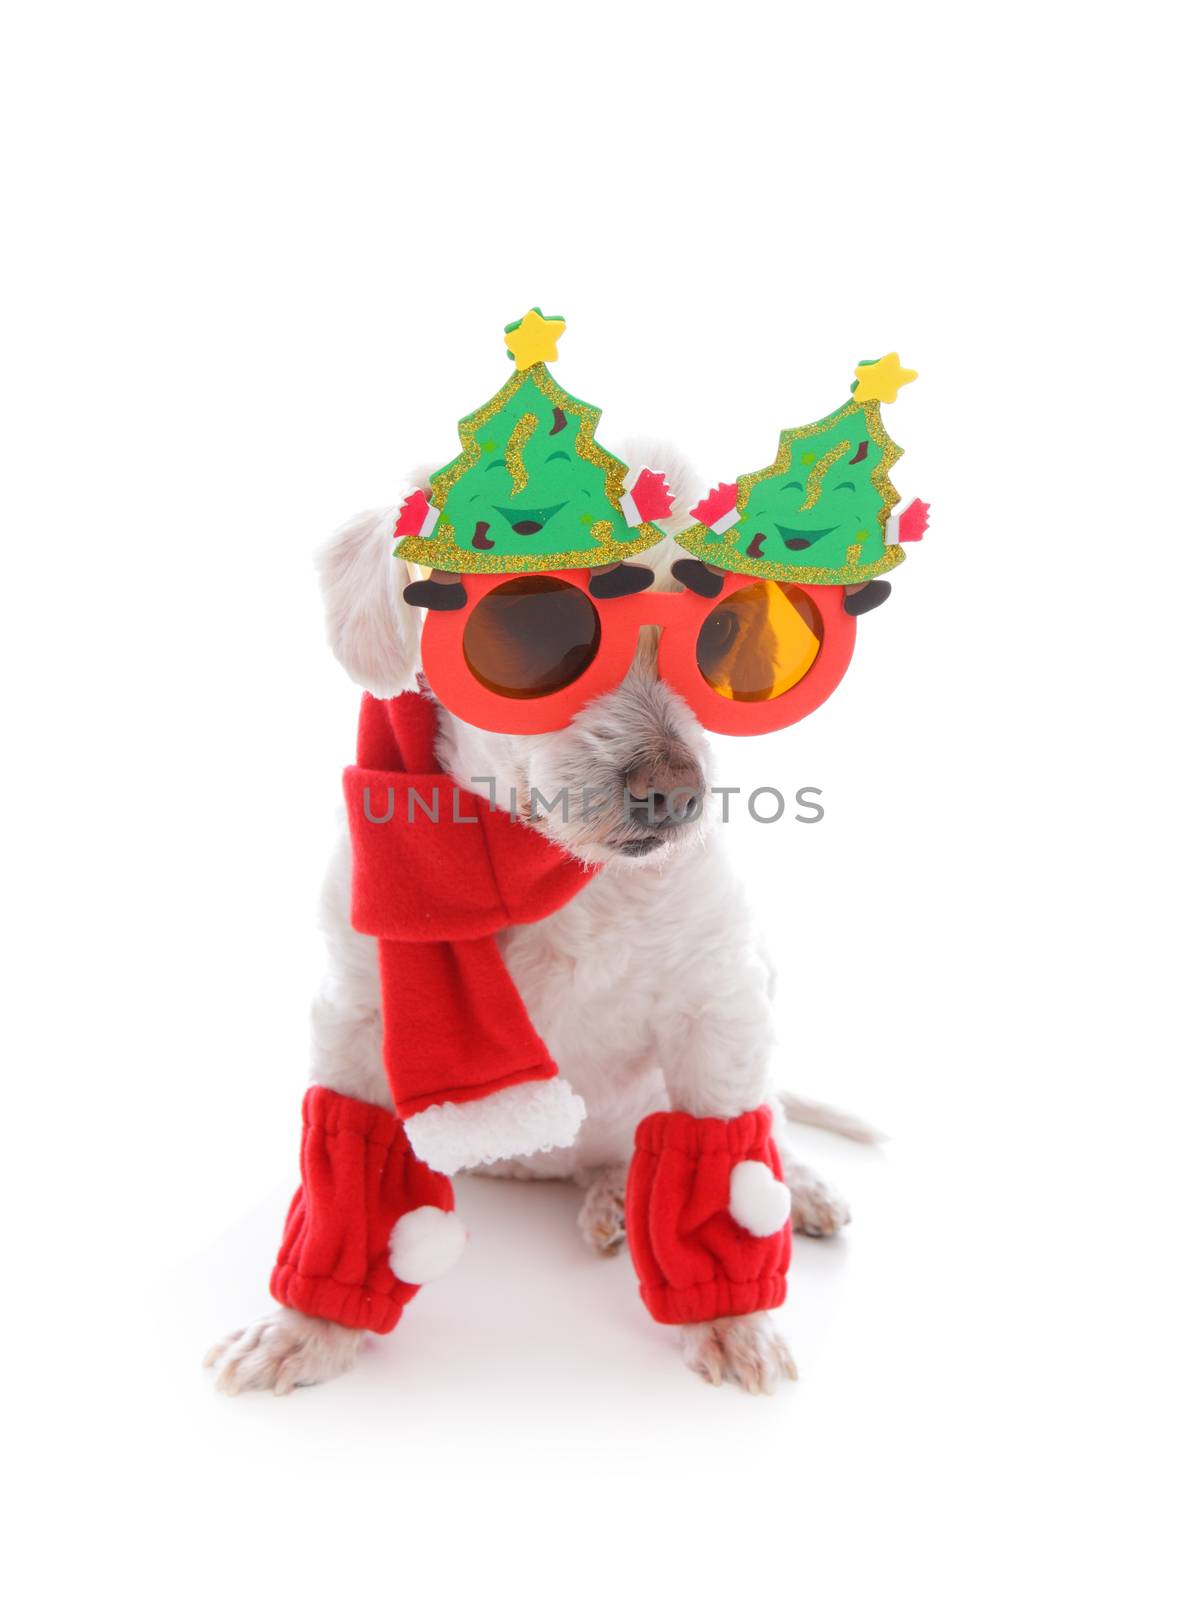 Pet dog in the spirit celebrates Christmas during the holiday season.  White background.   